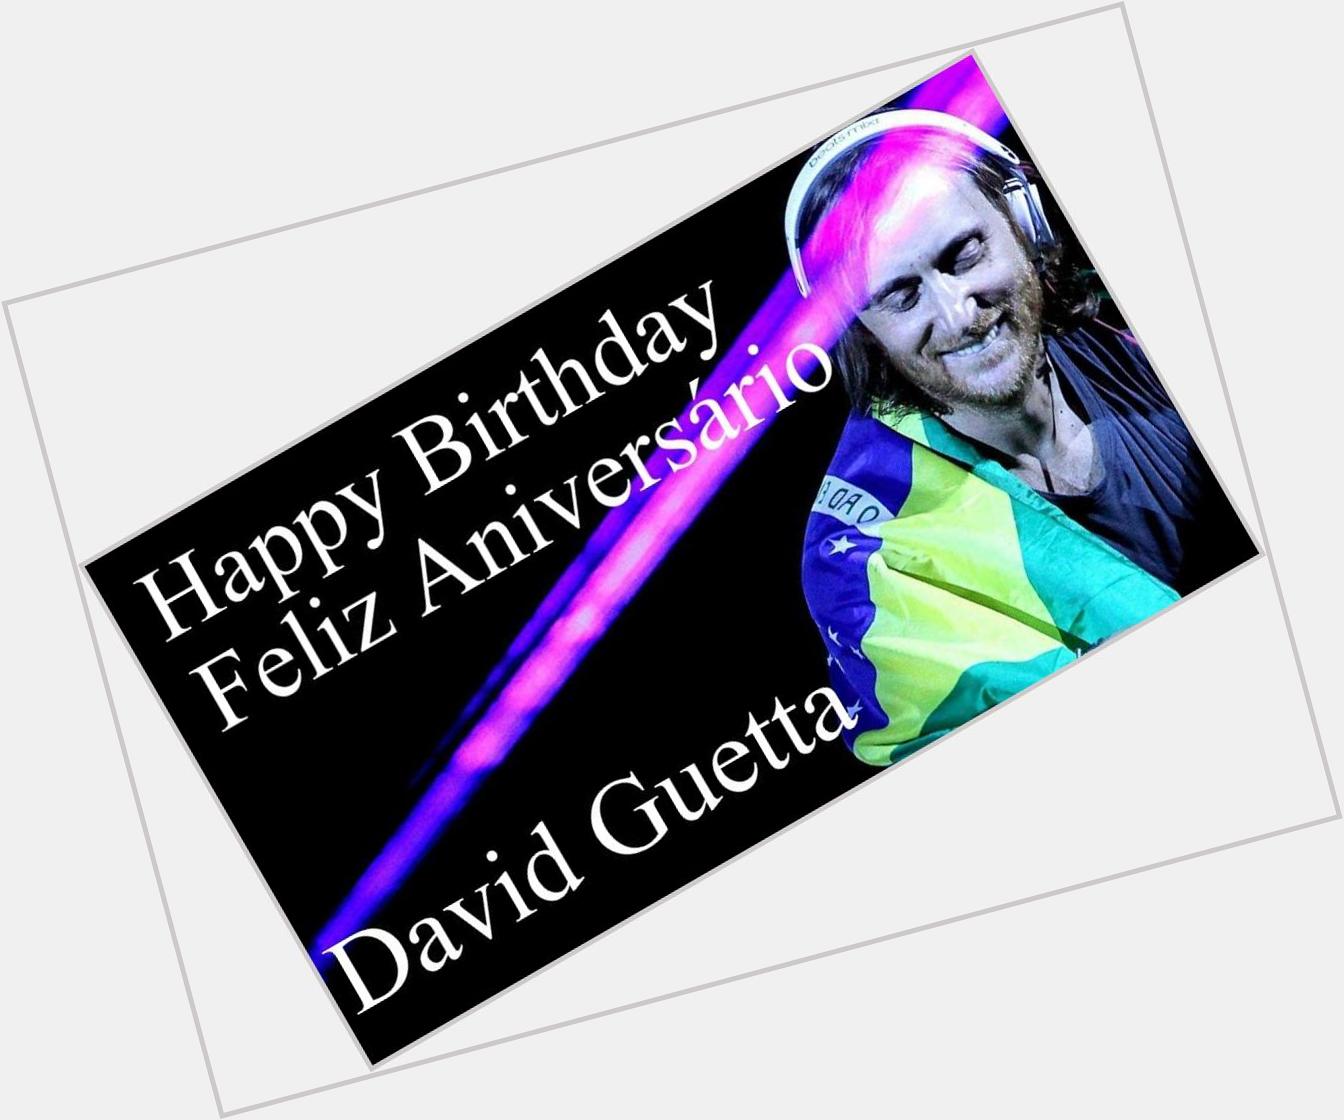  Parabéns David Guetta o Brasil te ama
Happy Birthday DG the Brazil love you    